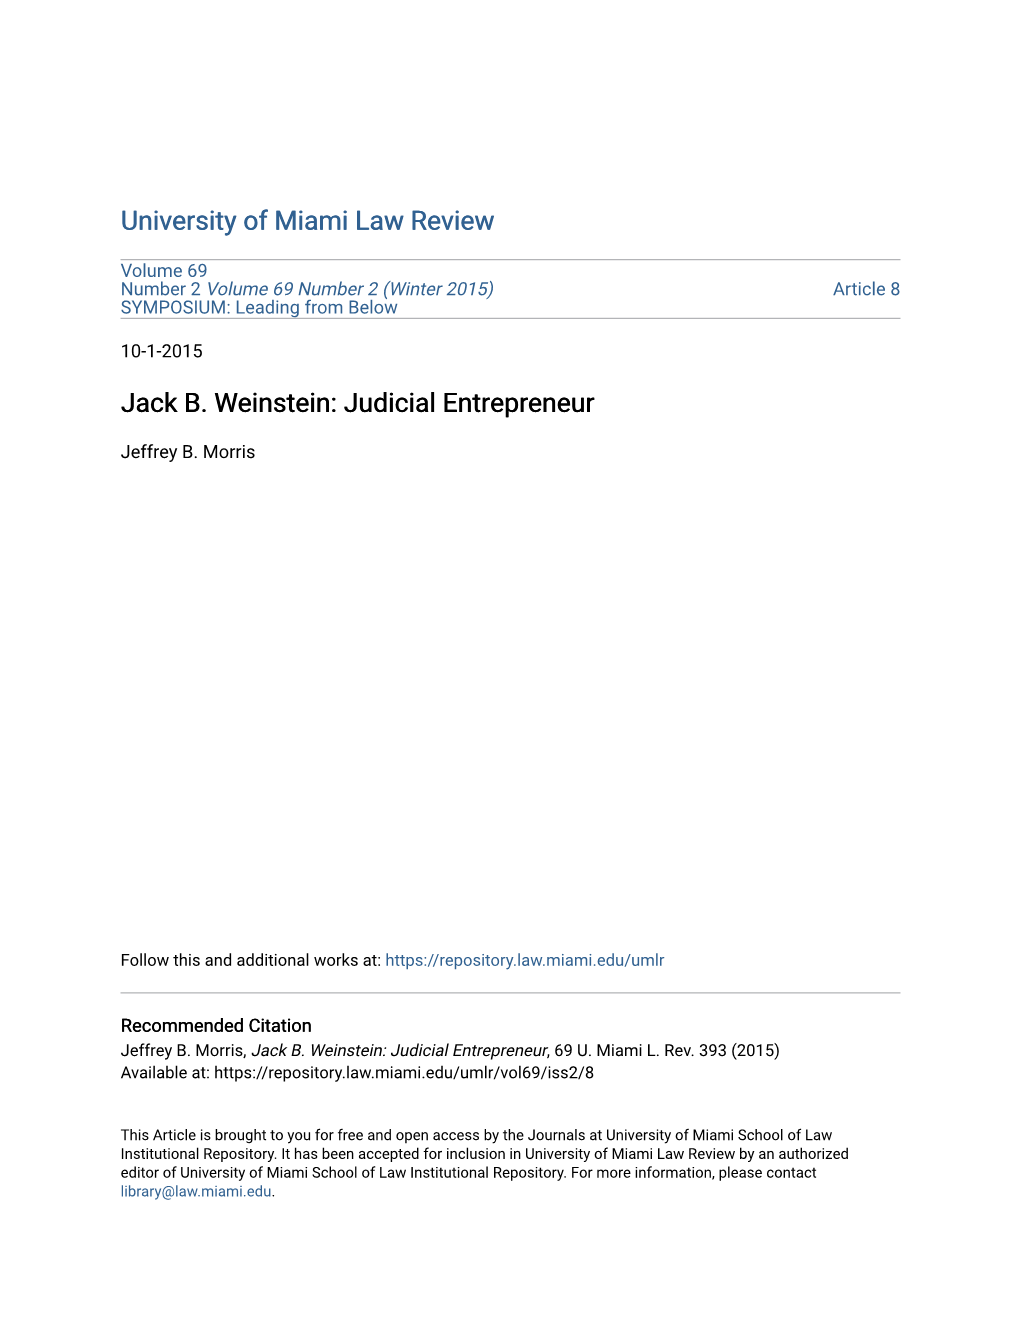 Jack B. Weinstein: Judicial Entrepreneur